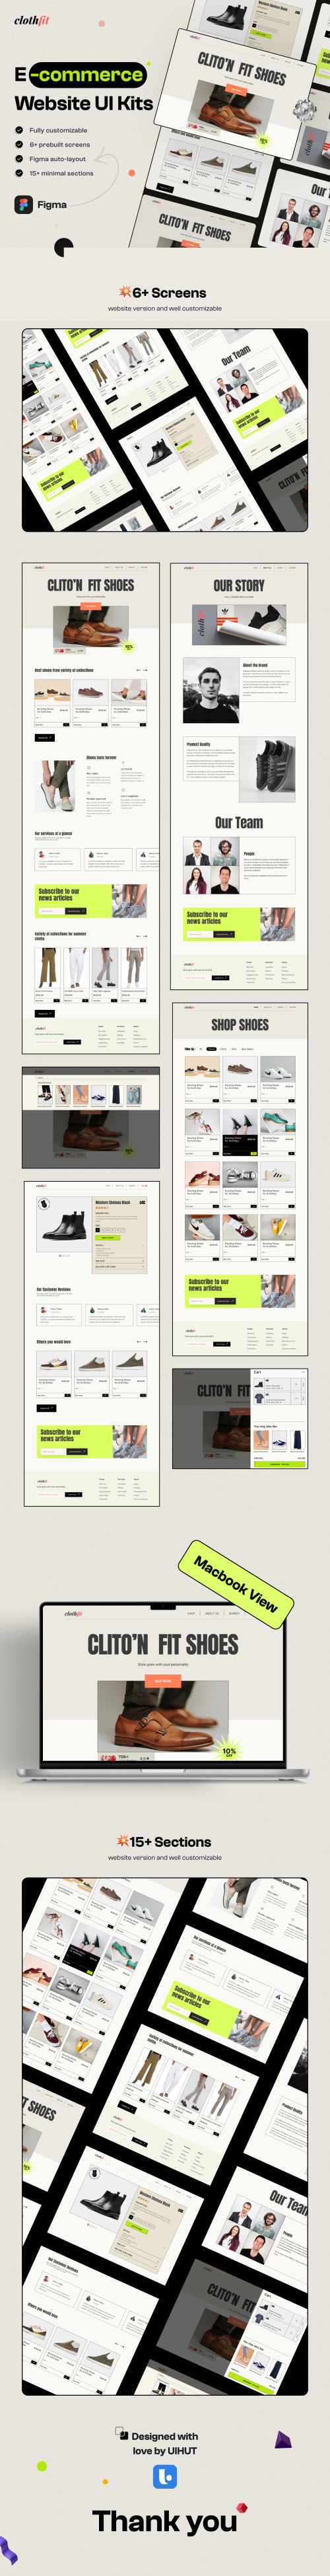 UIHut - E-commerce website template UI kit - 21646